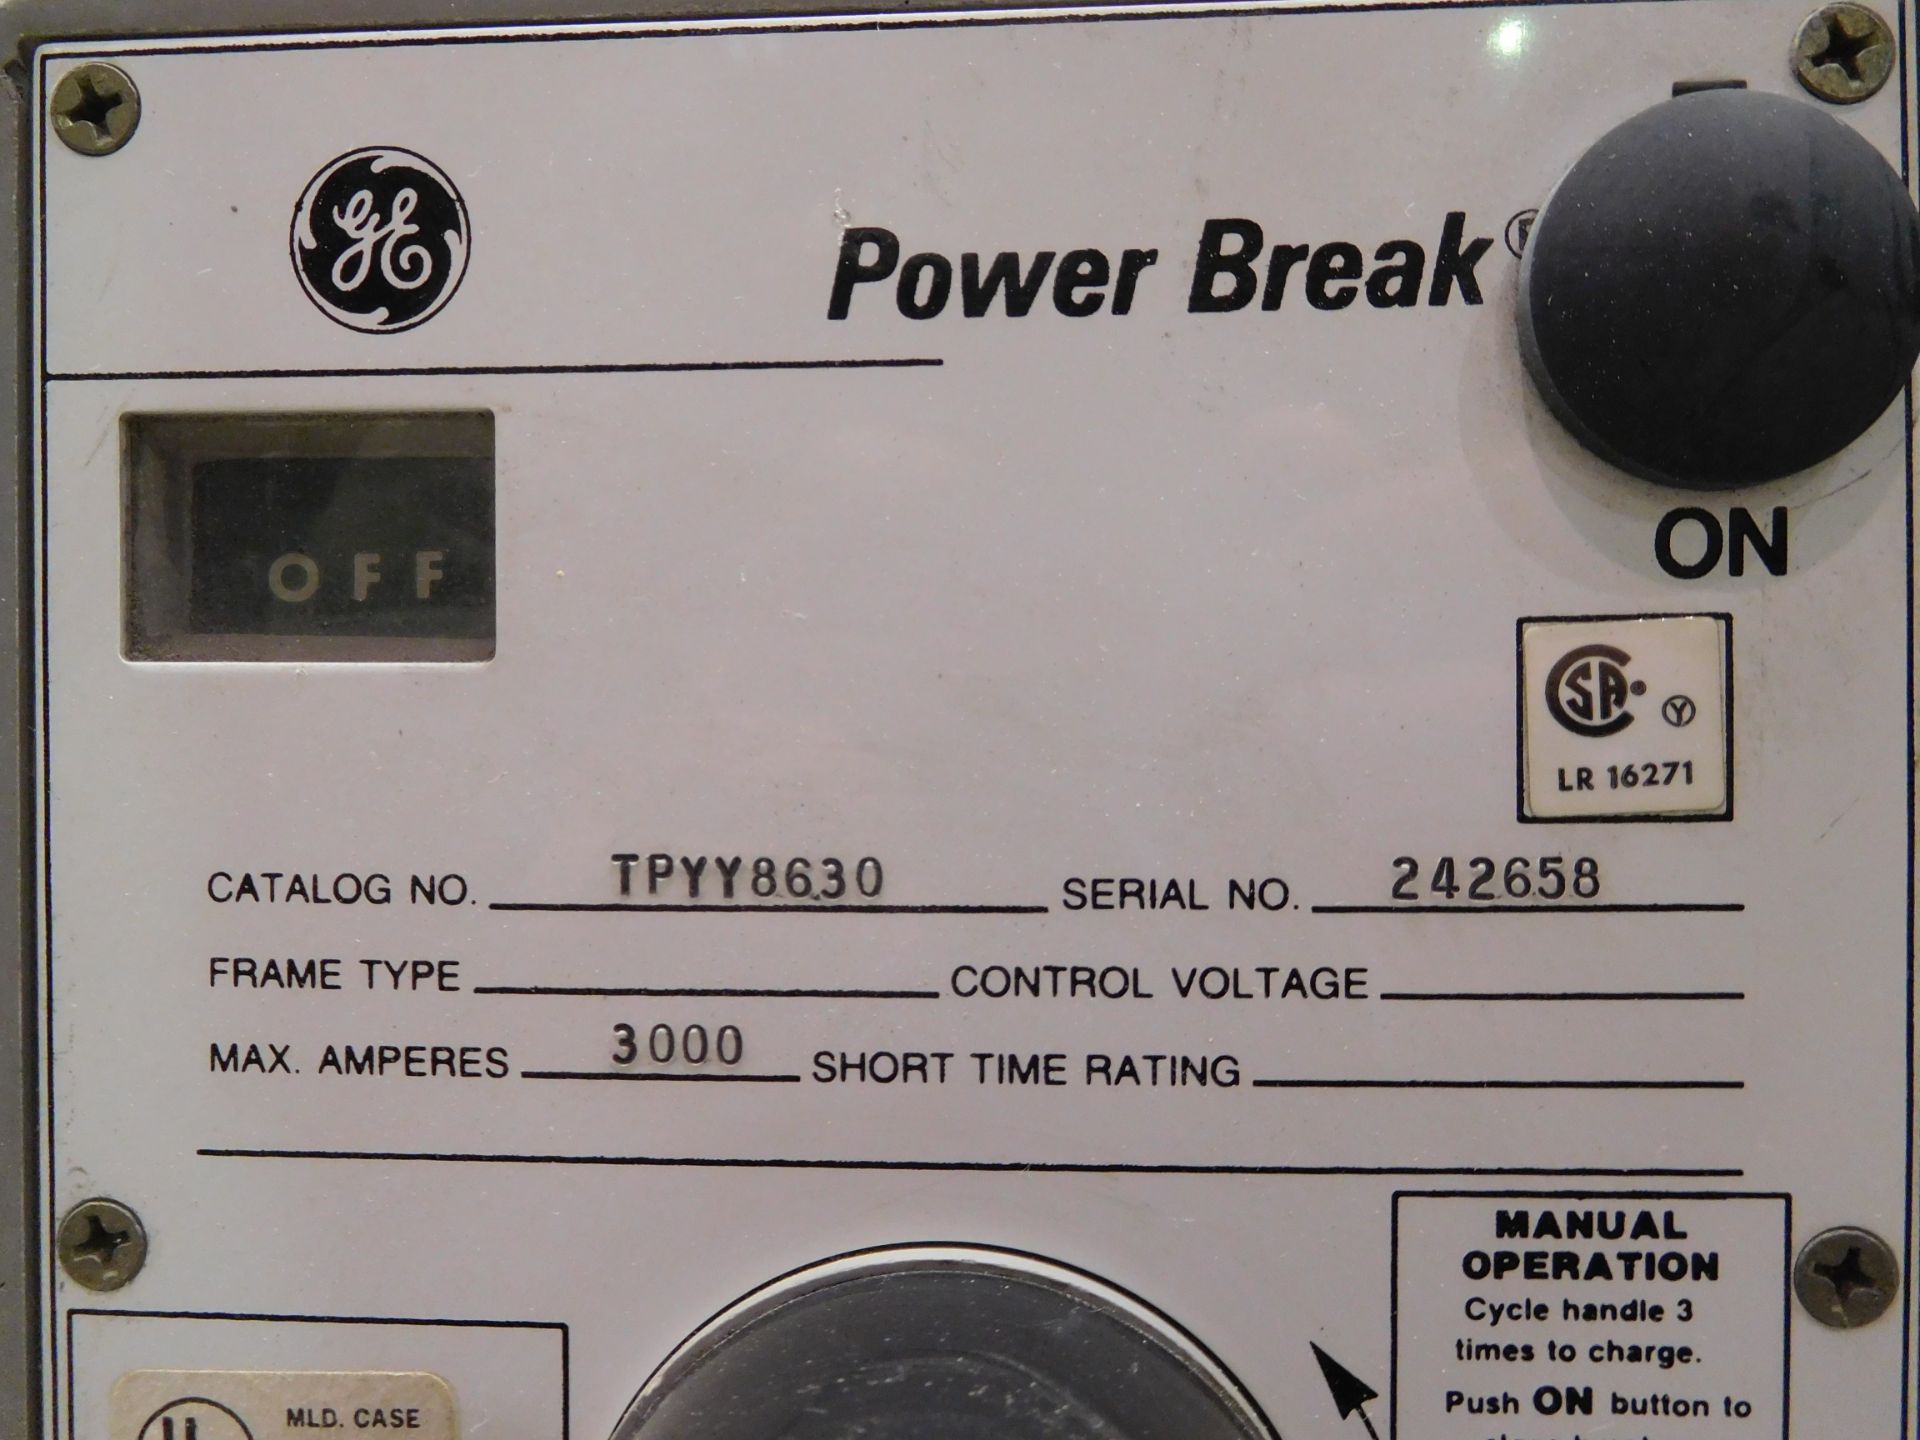 GE TPYY8630 Power Break 3000 Amp Circuit Breaker - Image 2 of 8